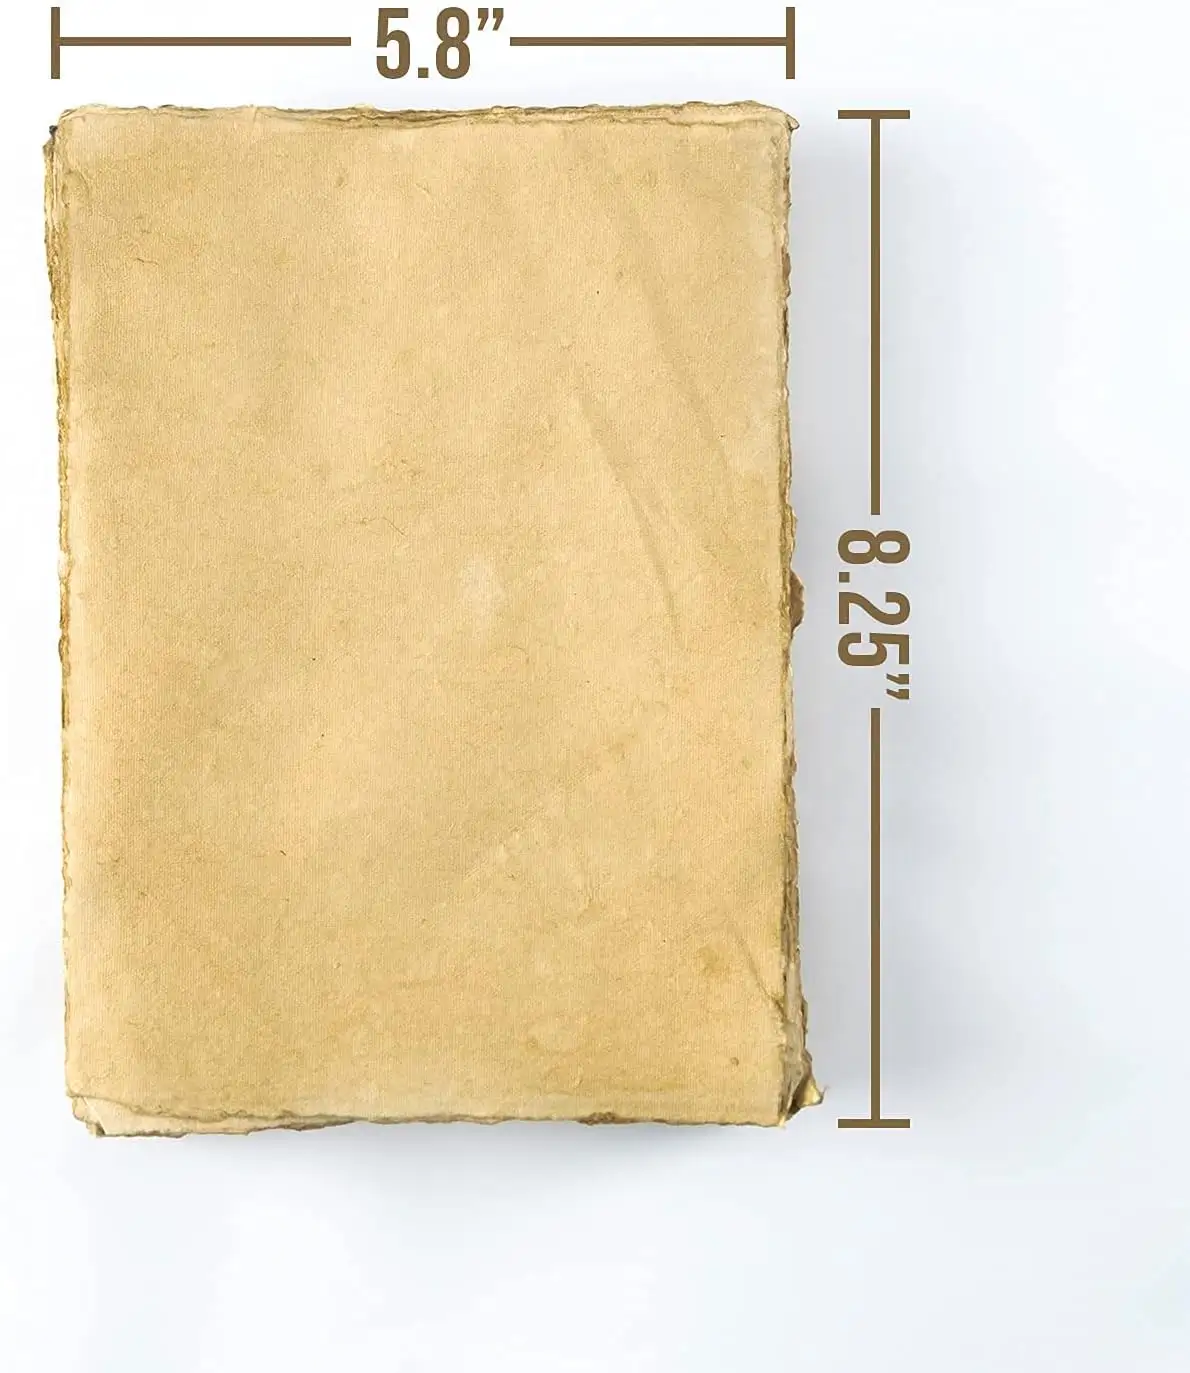 Kosong Vintage buatan tangan Deckled kertas tepi 75 lembar dari kertas katun daur ulang lembar sempurna untuk setiap Medium cat air kosong